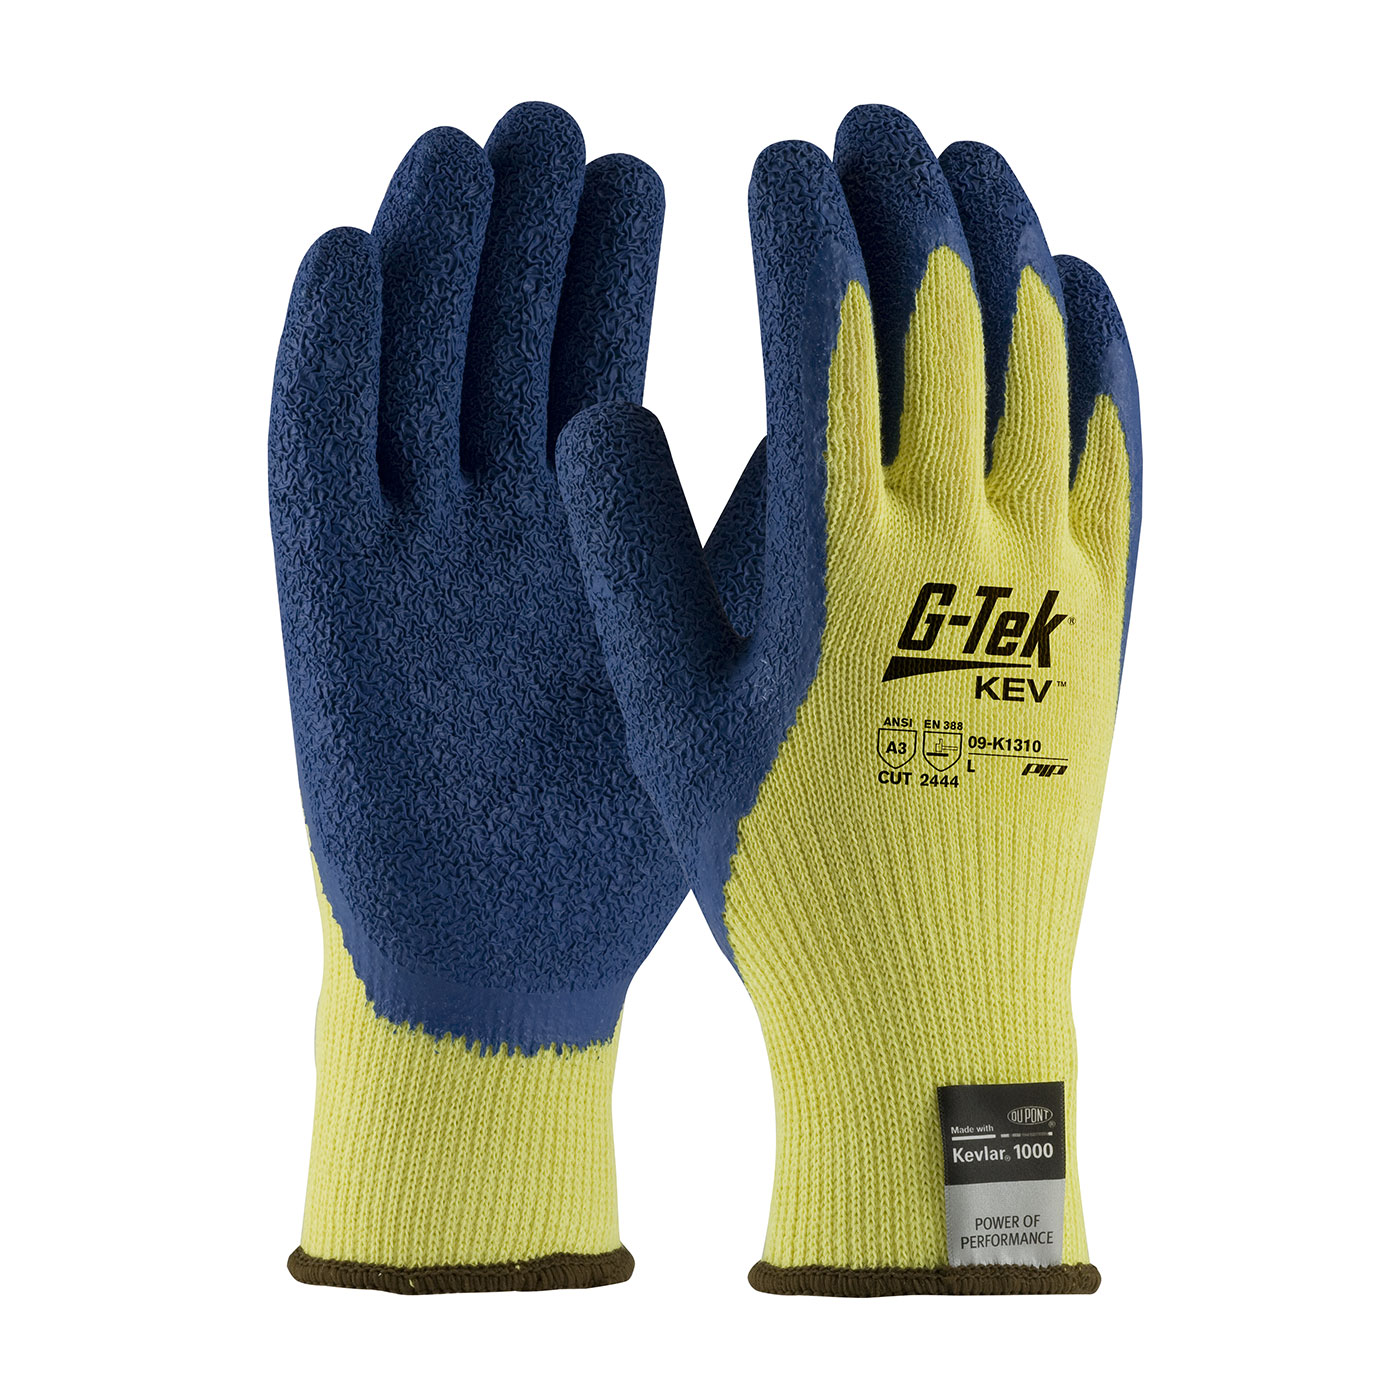 #09-K1310 PIP G-Tek® KEV™ Kevlar® Latex Coated Cut-Resistant Protective Work Gloves w/ Crinkle Coating. Cut level 3.